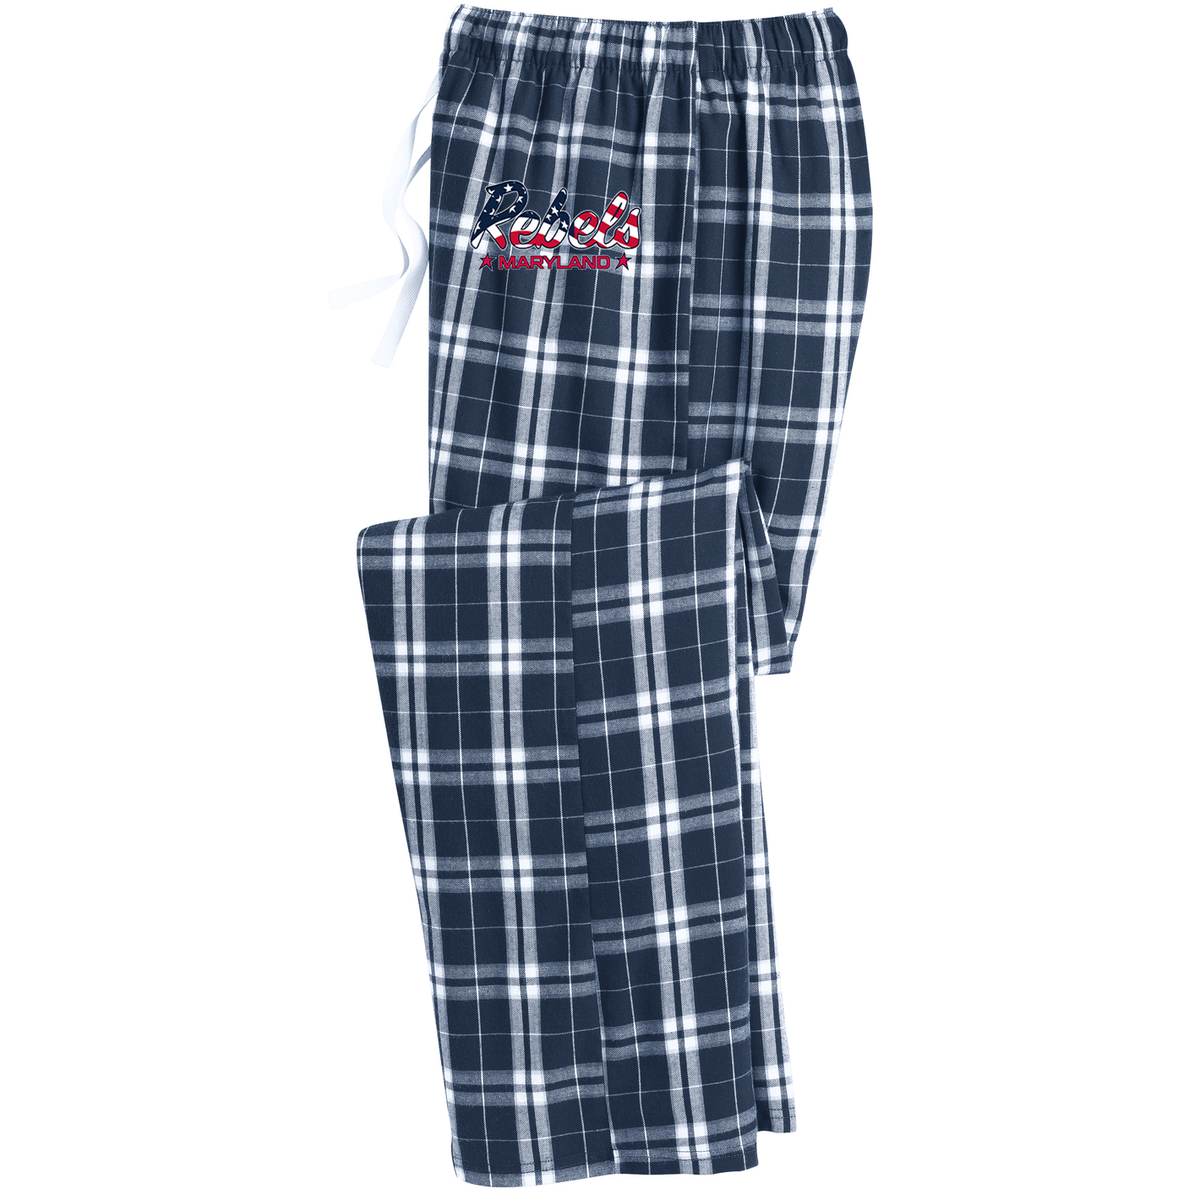 Rebels Maryland Plaid Pajama Pants